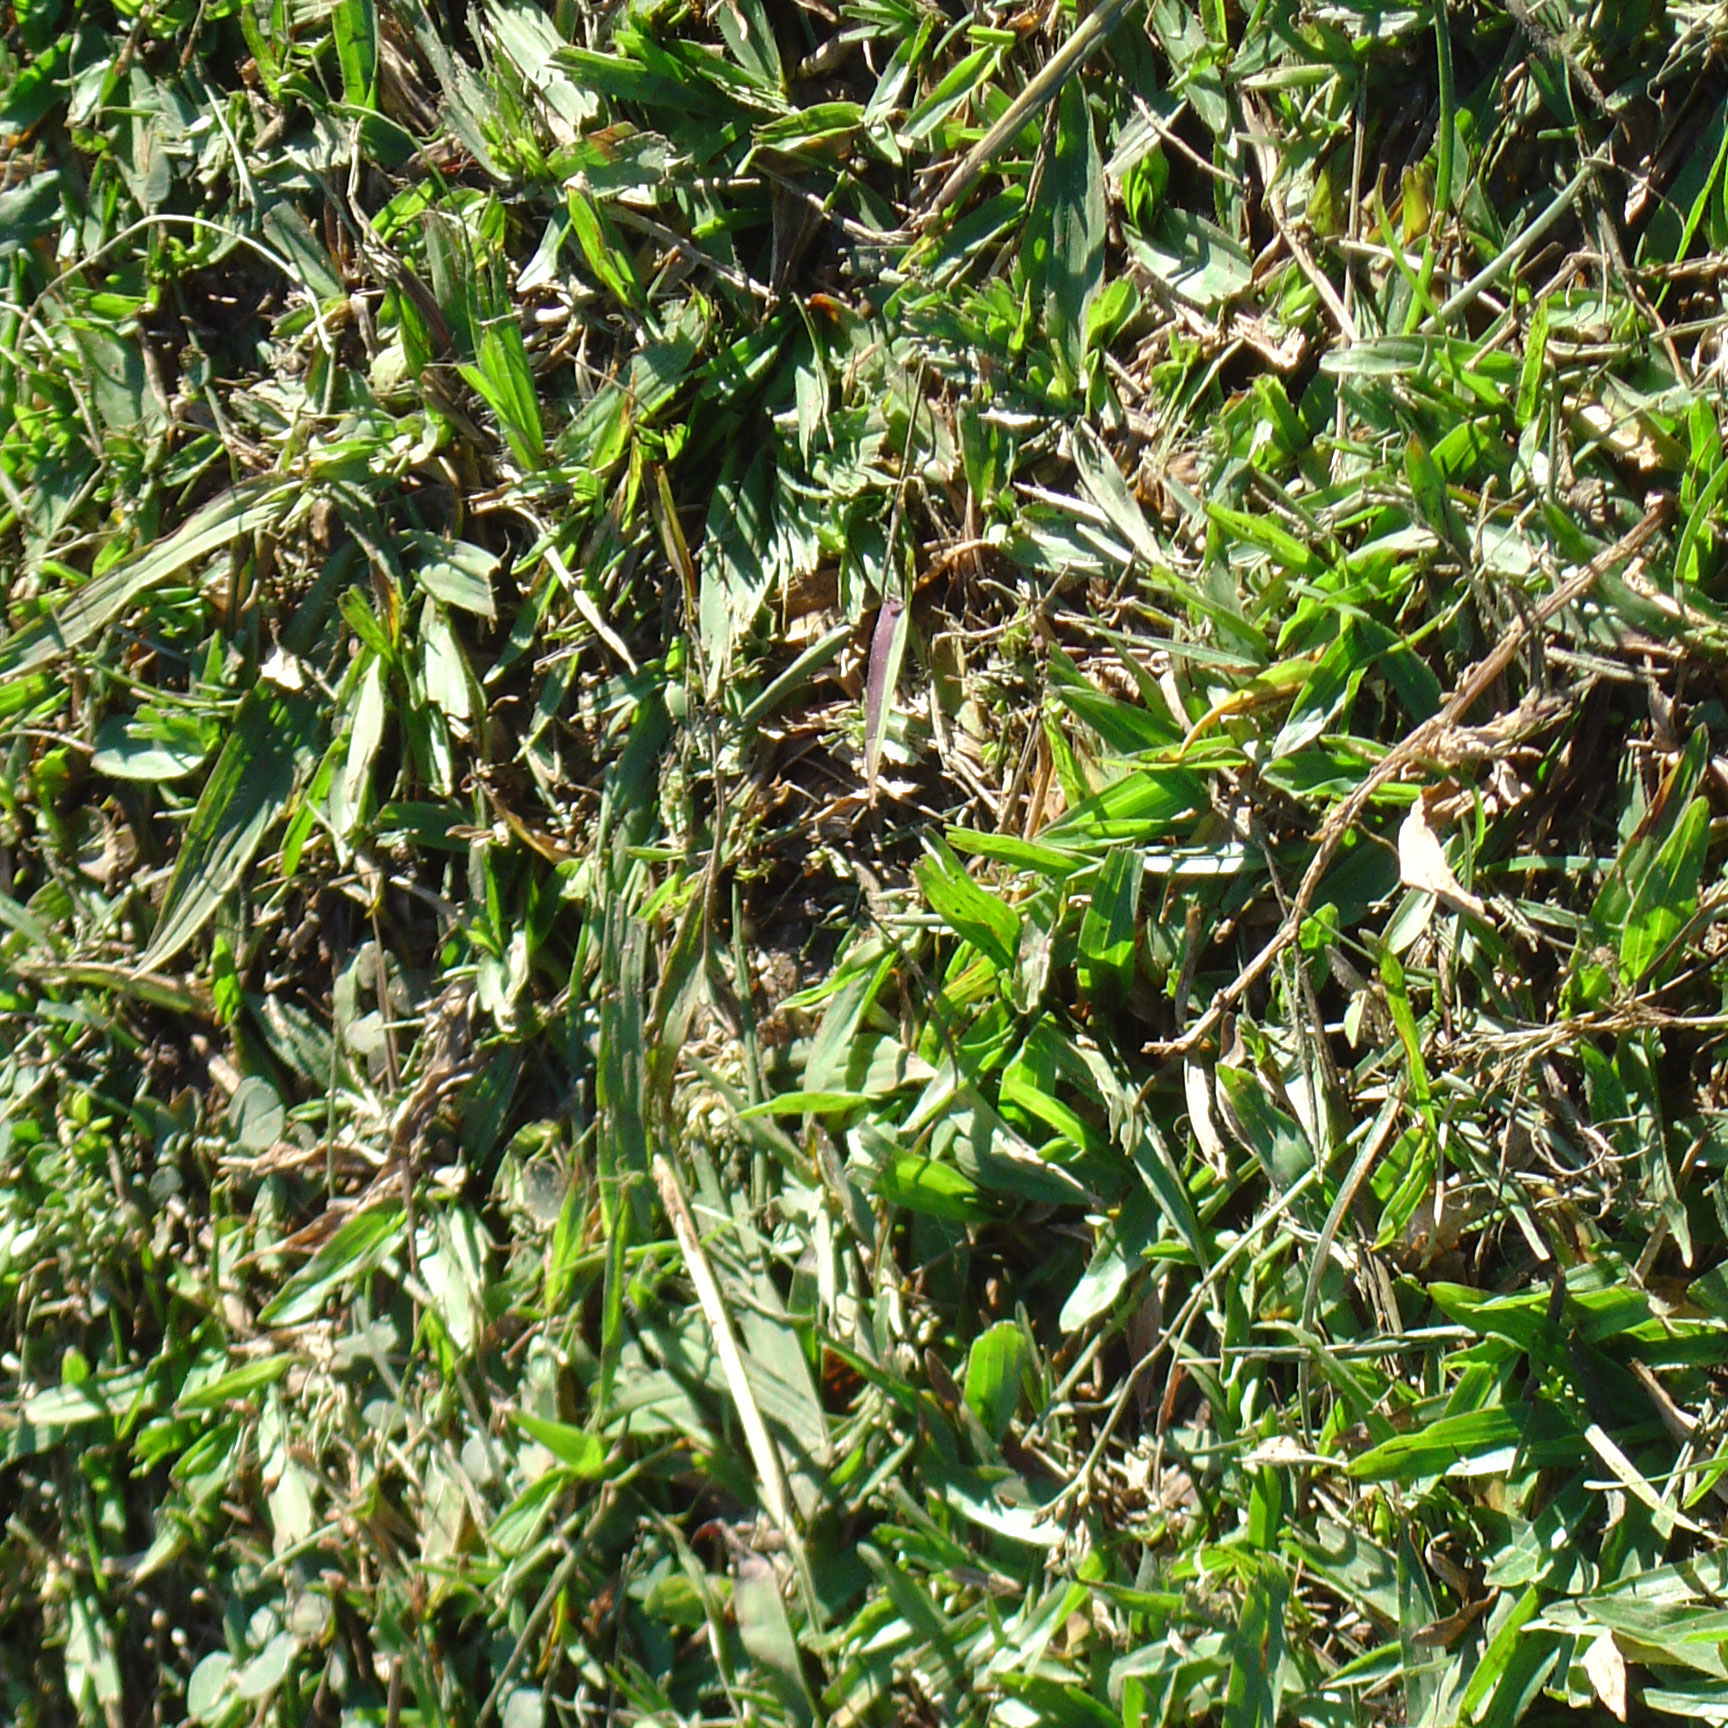 adriano ribeiro ground green blades of grass texture